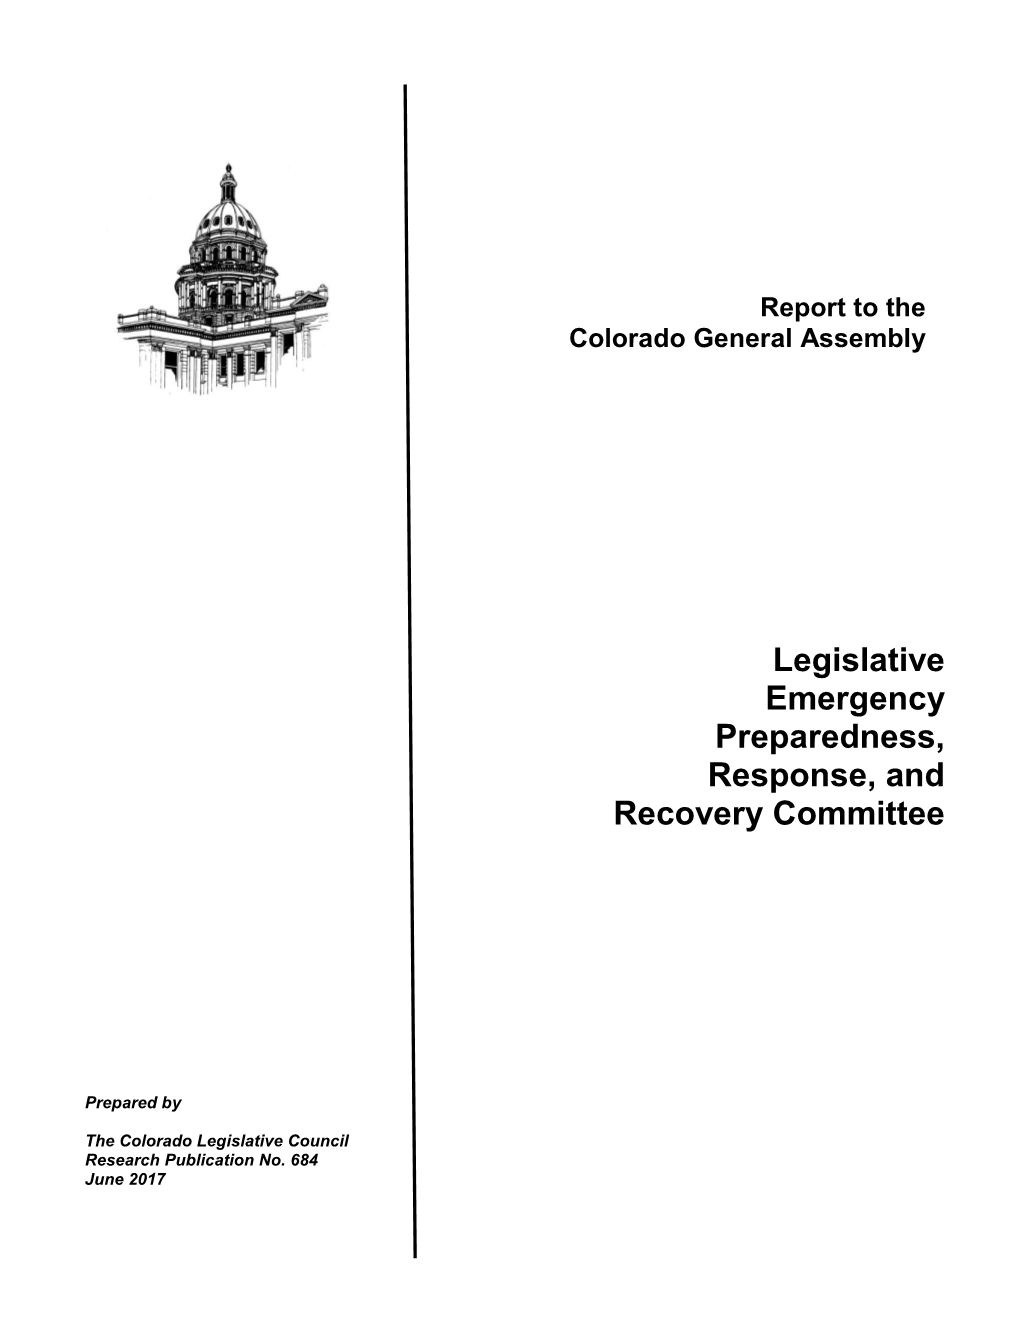 Legislative Emergency Preparedness, Response, and Recovery Committee